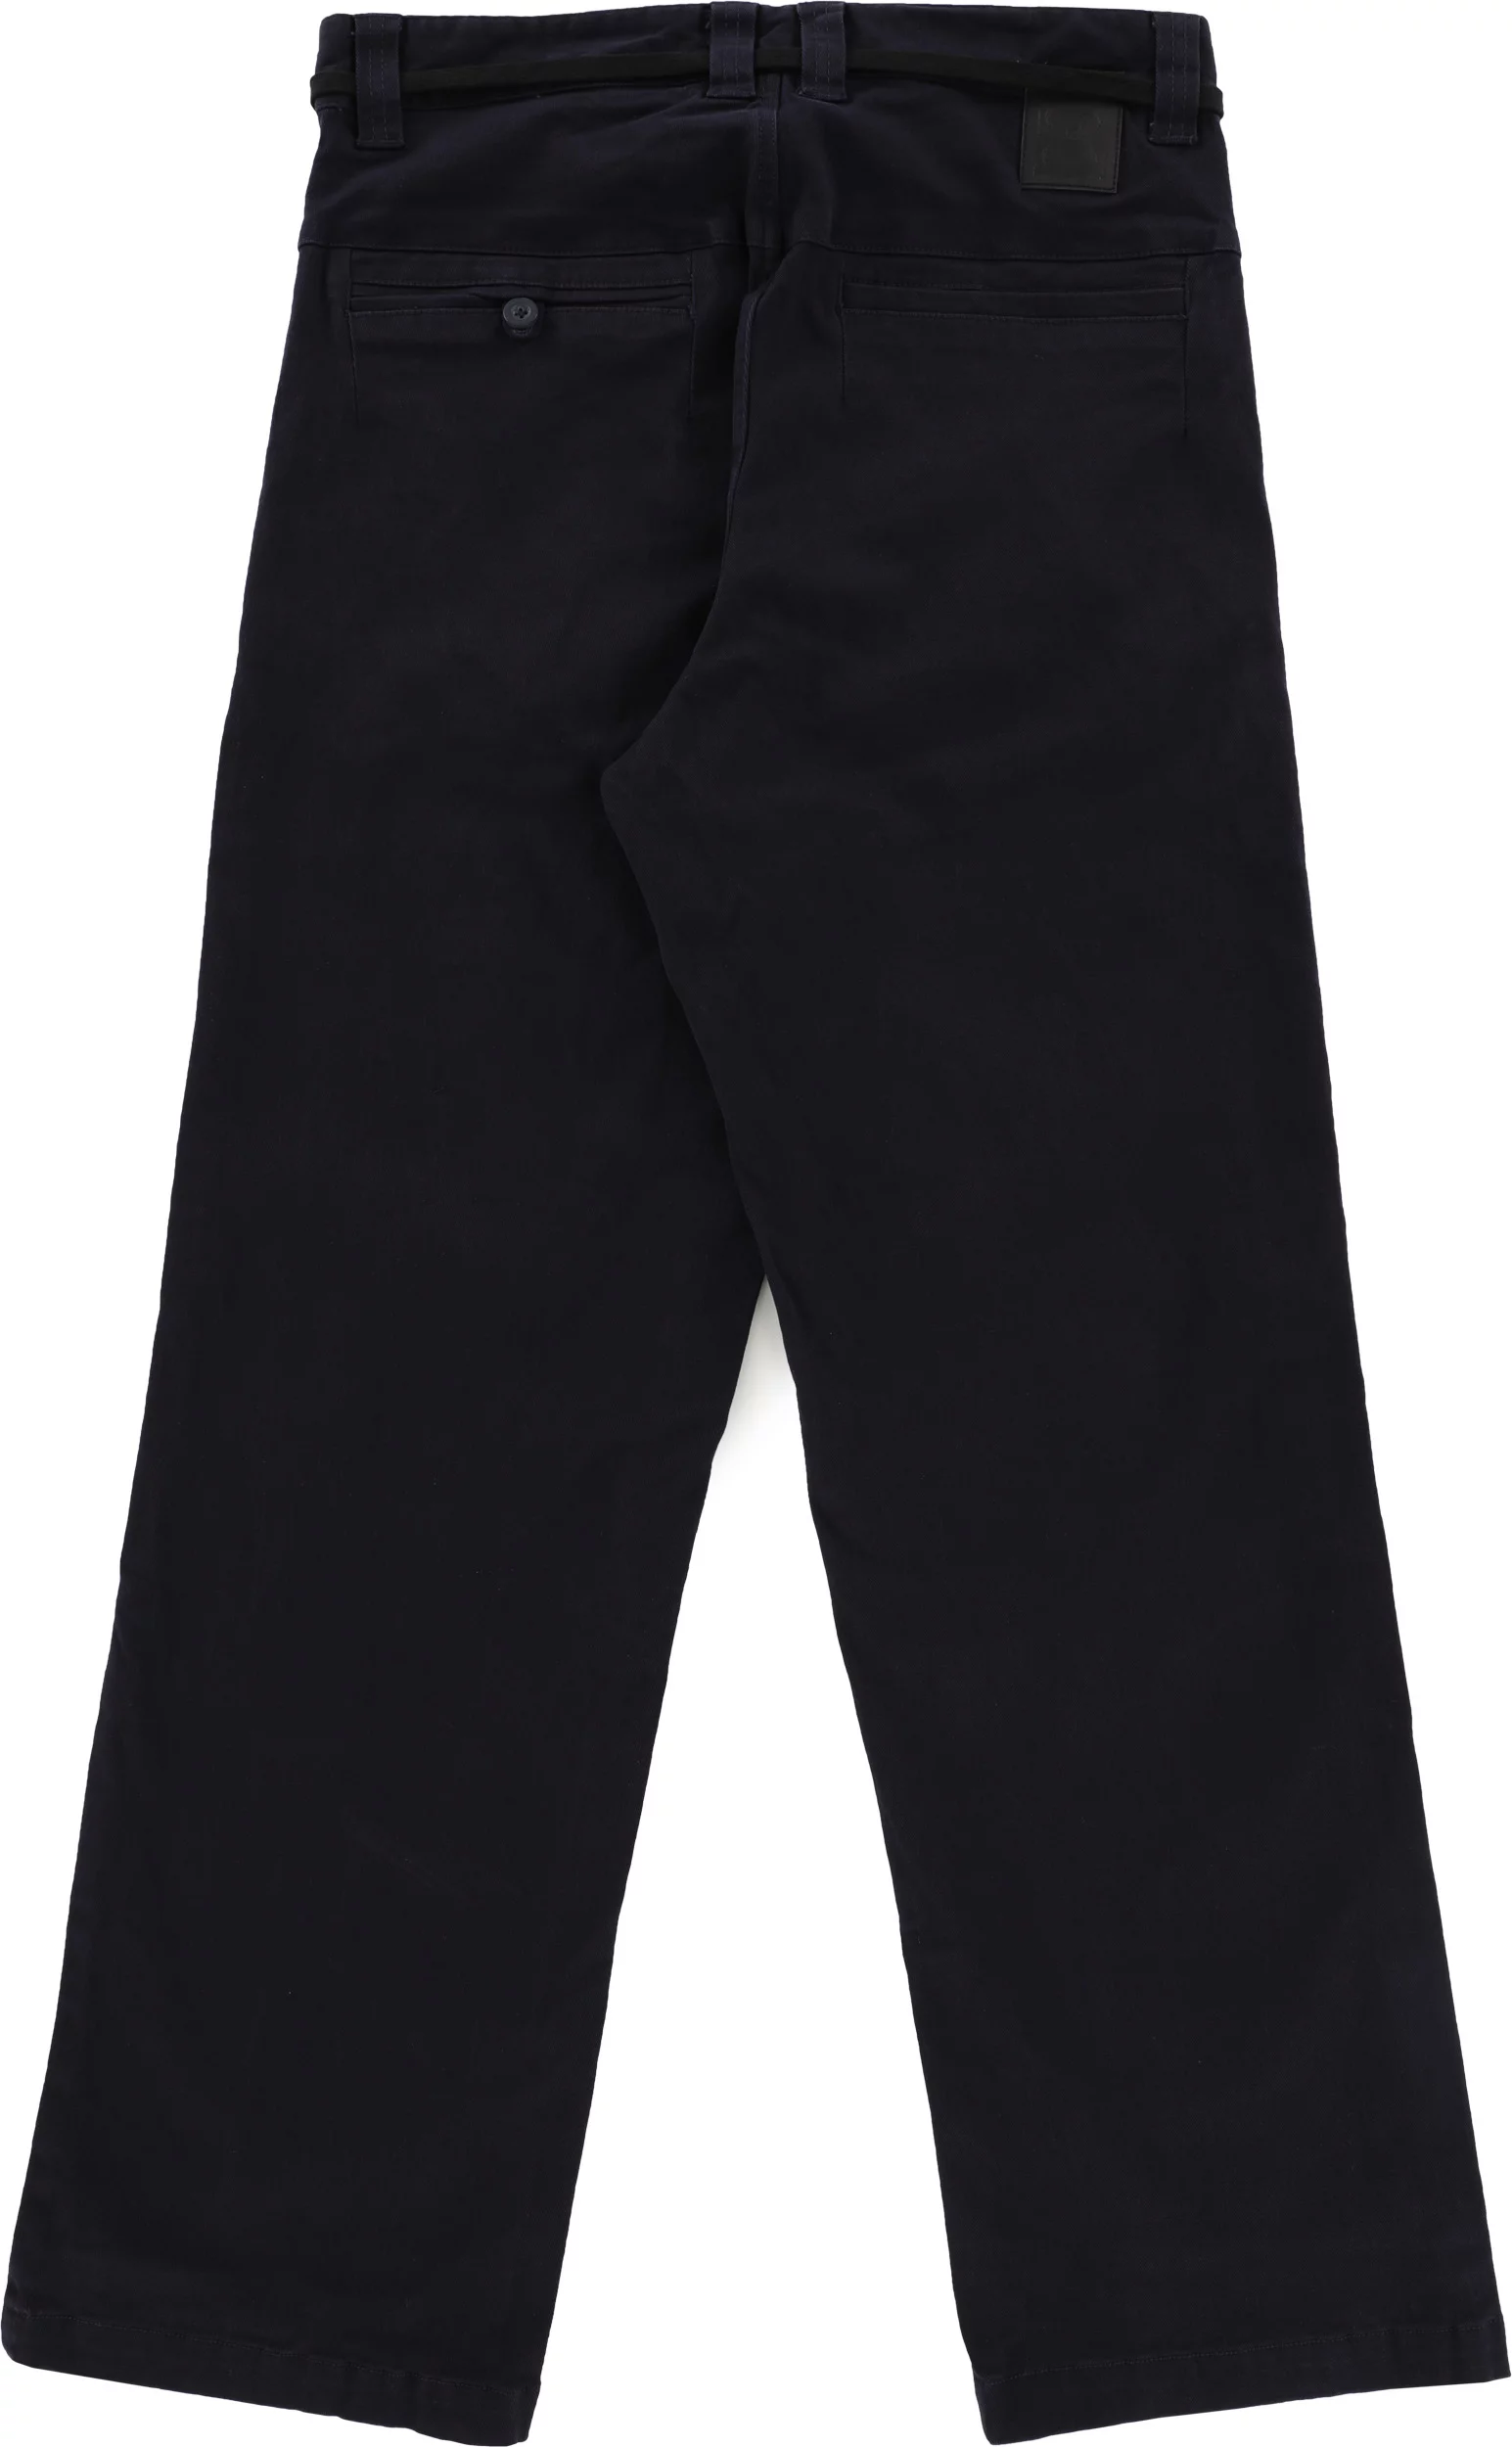 Crux Pant Men's Pants Navy Blue - ABK Company